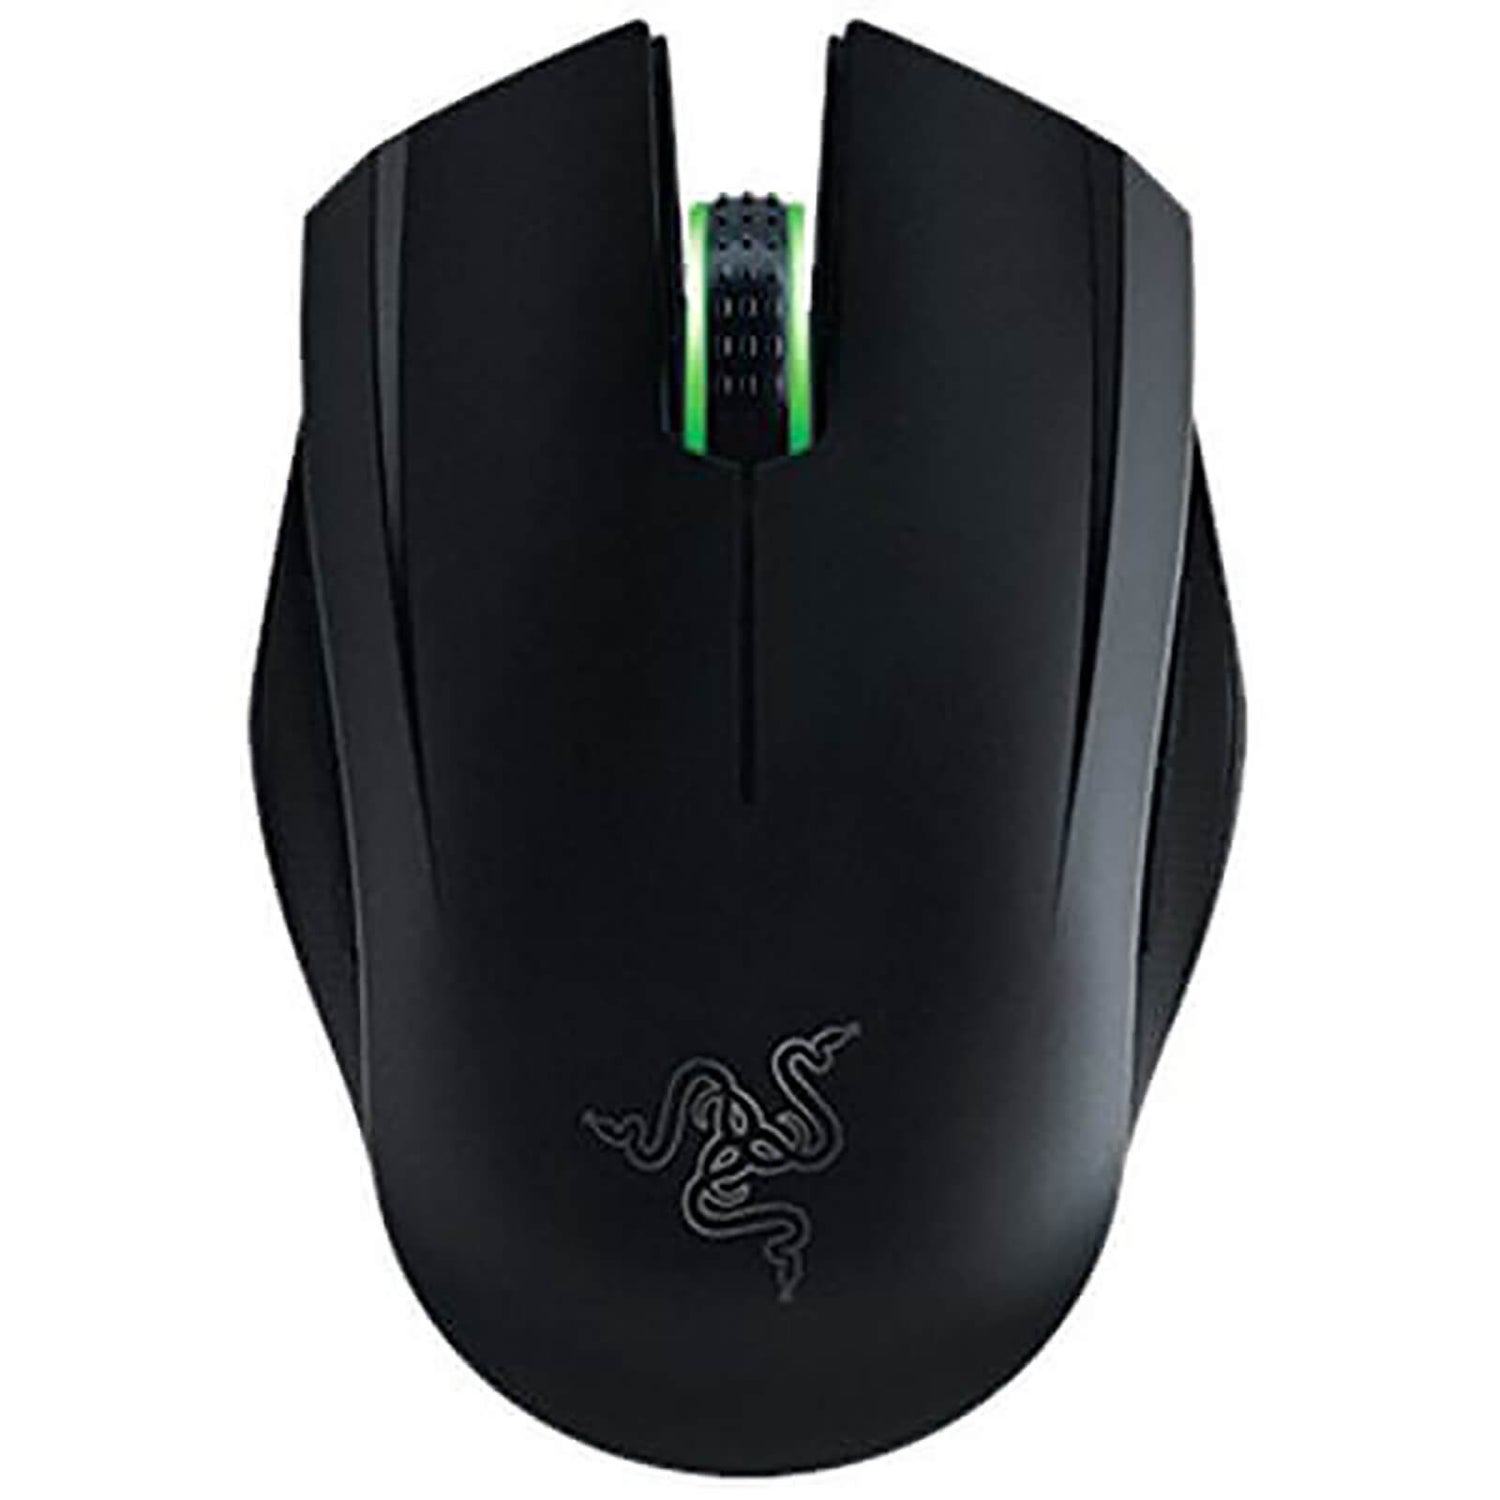 Razer Orochi Chroma Wireless Gaming Mouse - Black (2 Year Warranty)